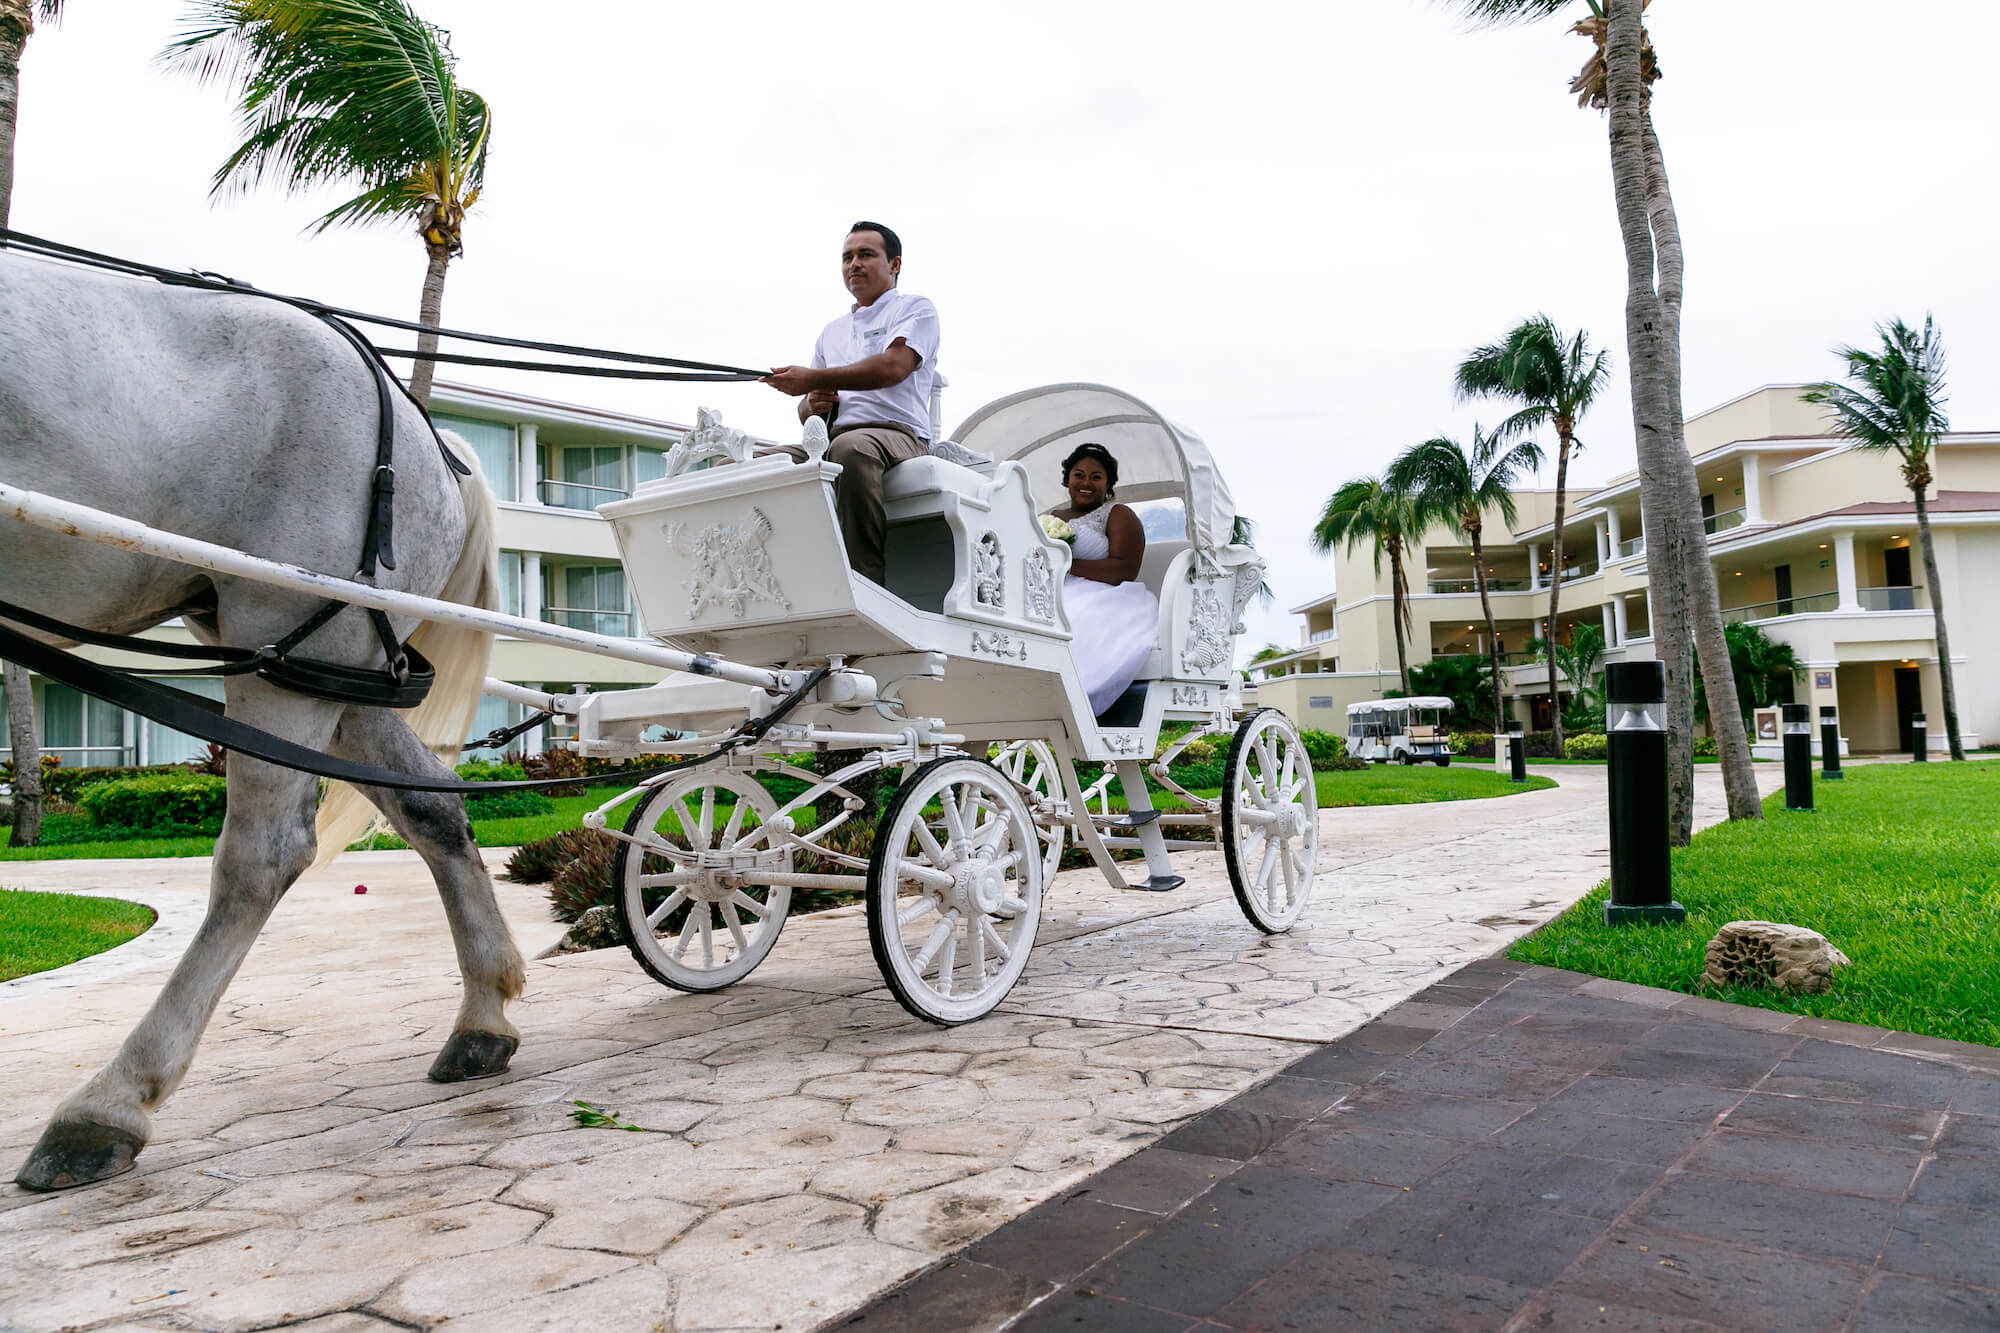 tressa-how-to-plan-a-destination-wedding-in-cancun-mexico-moon-palace-resort-black-destination-bride-destiland-desti-guide-to-destination-weddings-horse-carriage.jpg